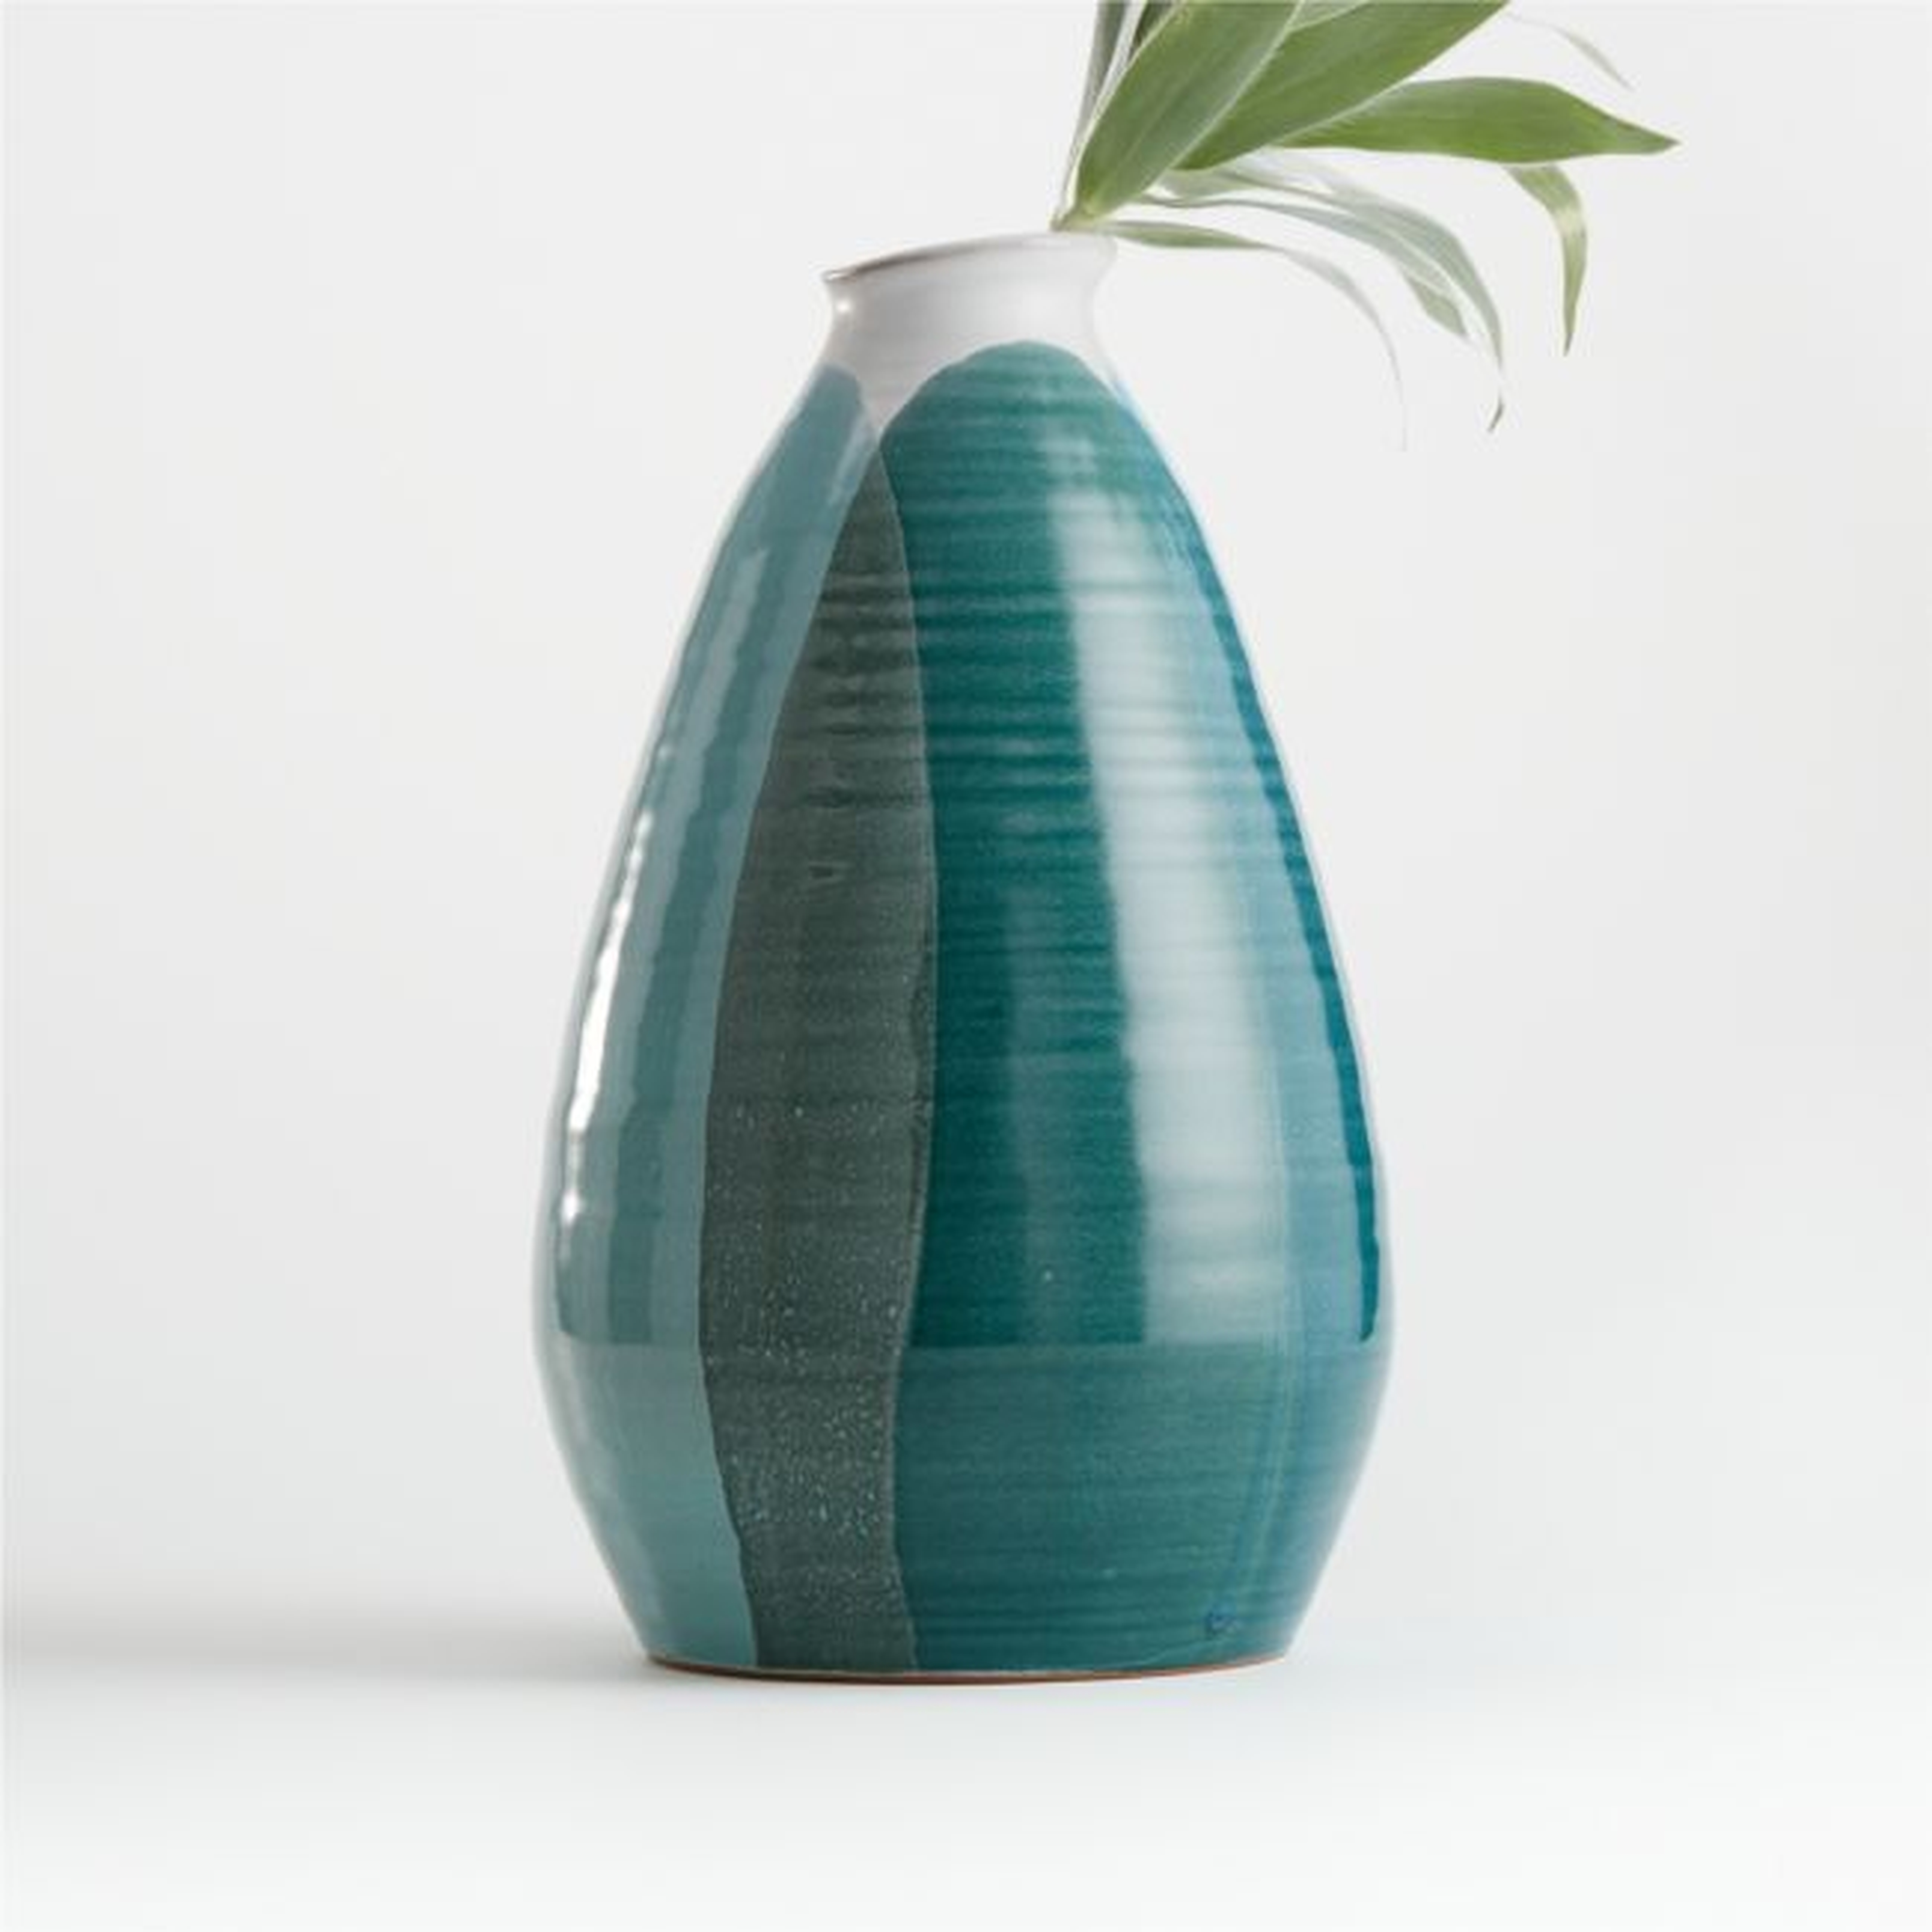 Lona Large Blue Green Vase - Crate and Barrel